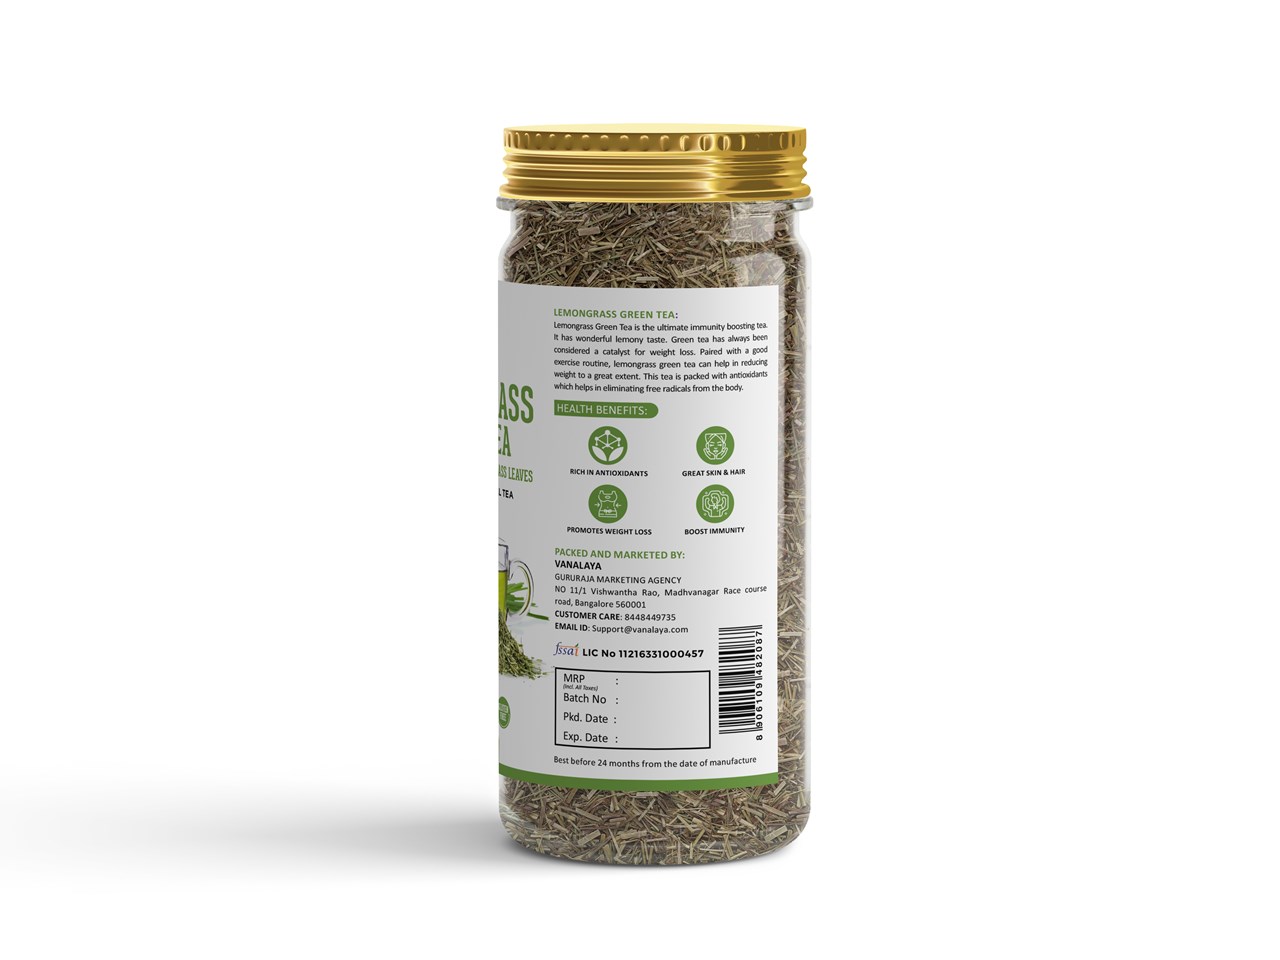 Picture of Lemongrass Green Tea (Detox Tea for Weight Loss & Stress Relief) - 50 gm